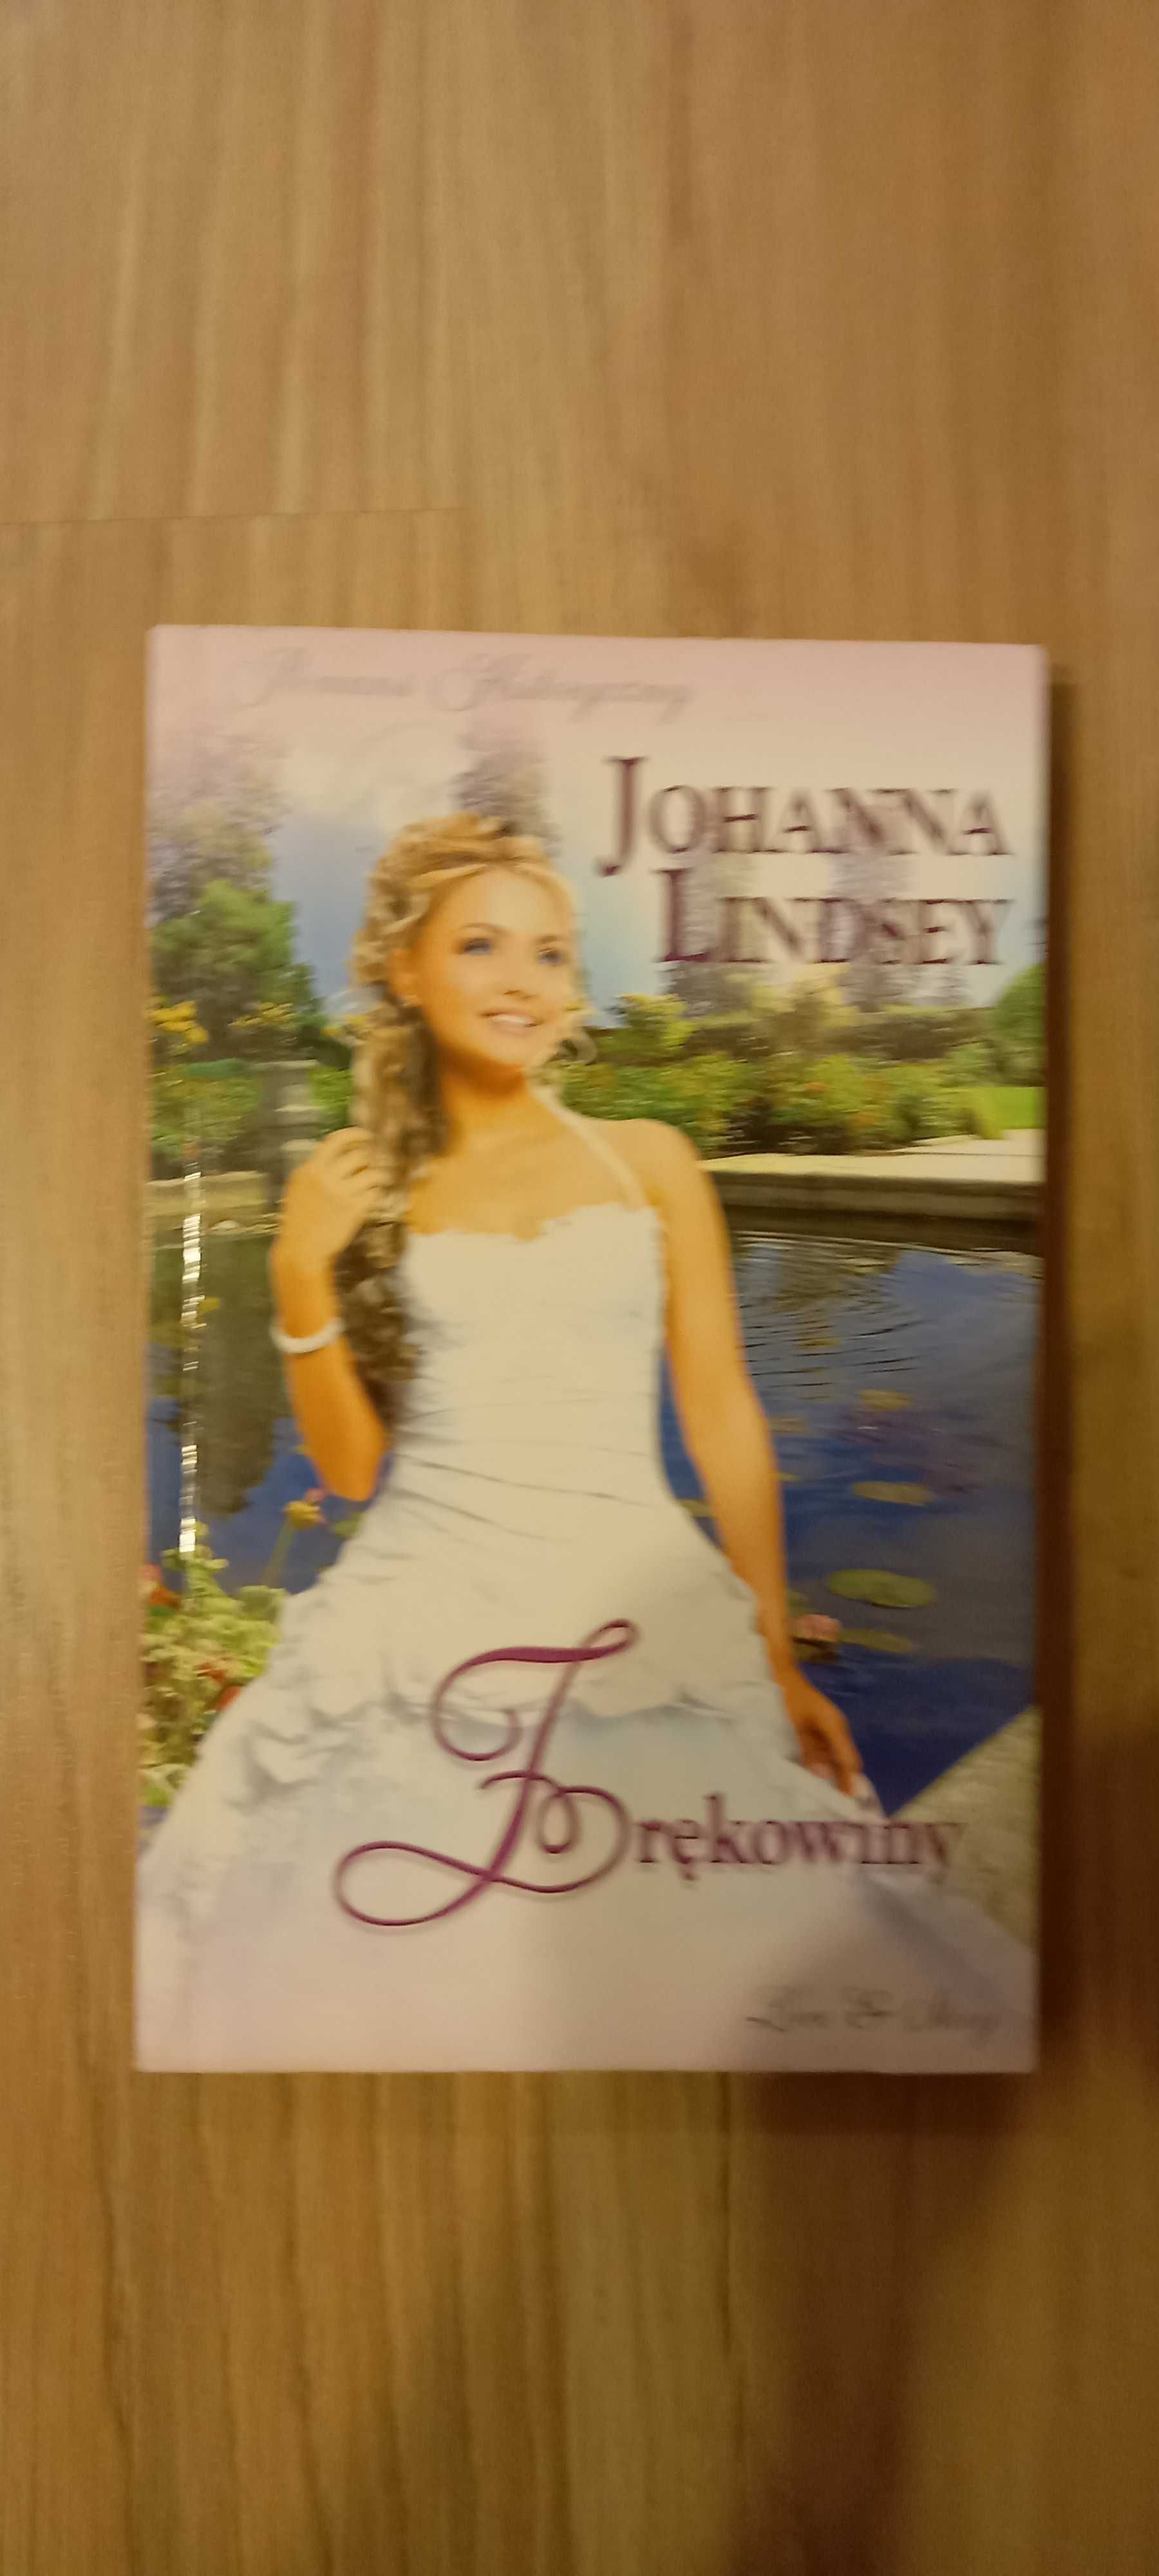 Zestaw książek z serii romanse historyczne autorki Johanny Lindsey